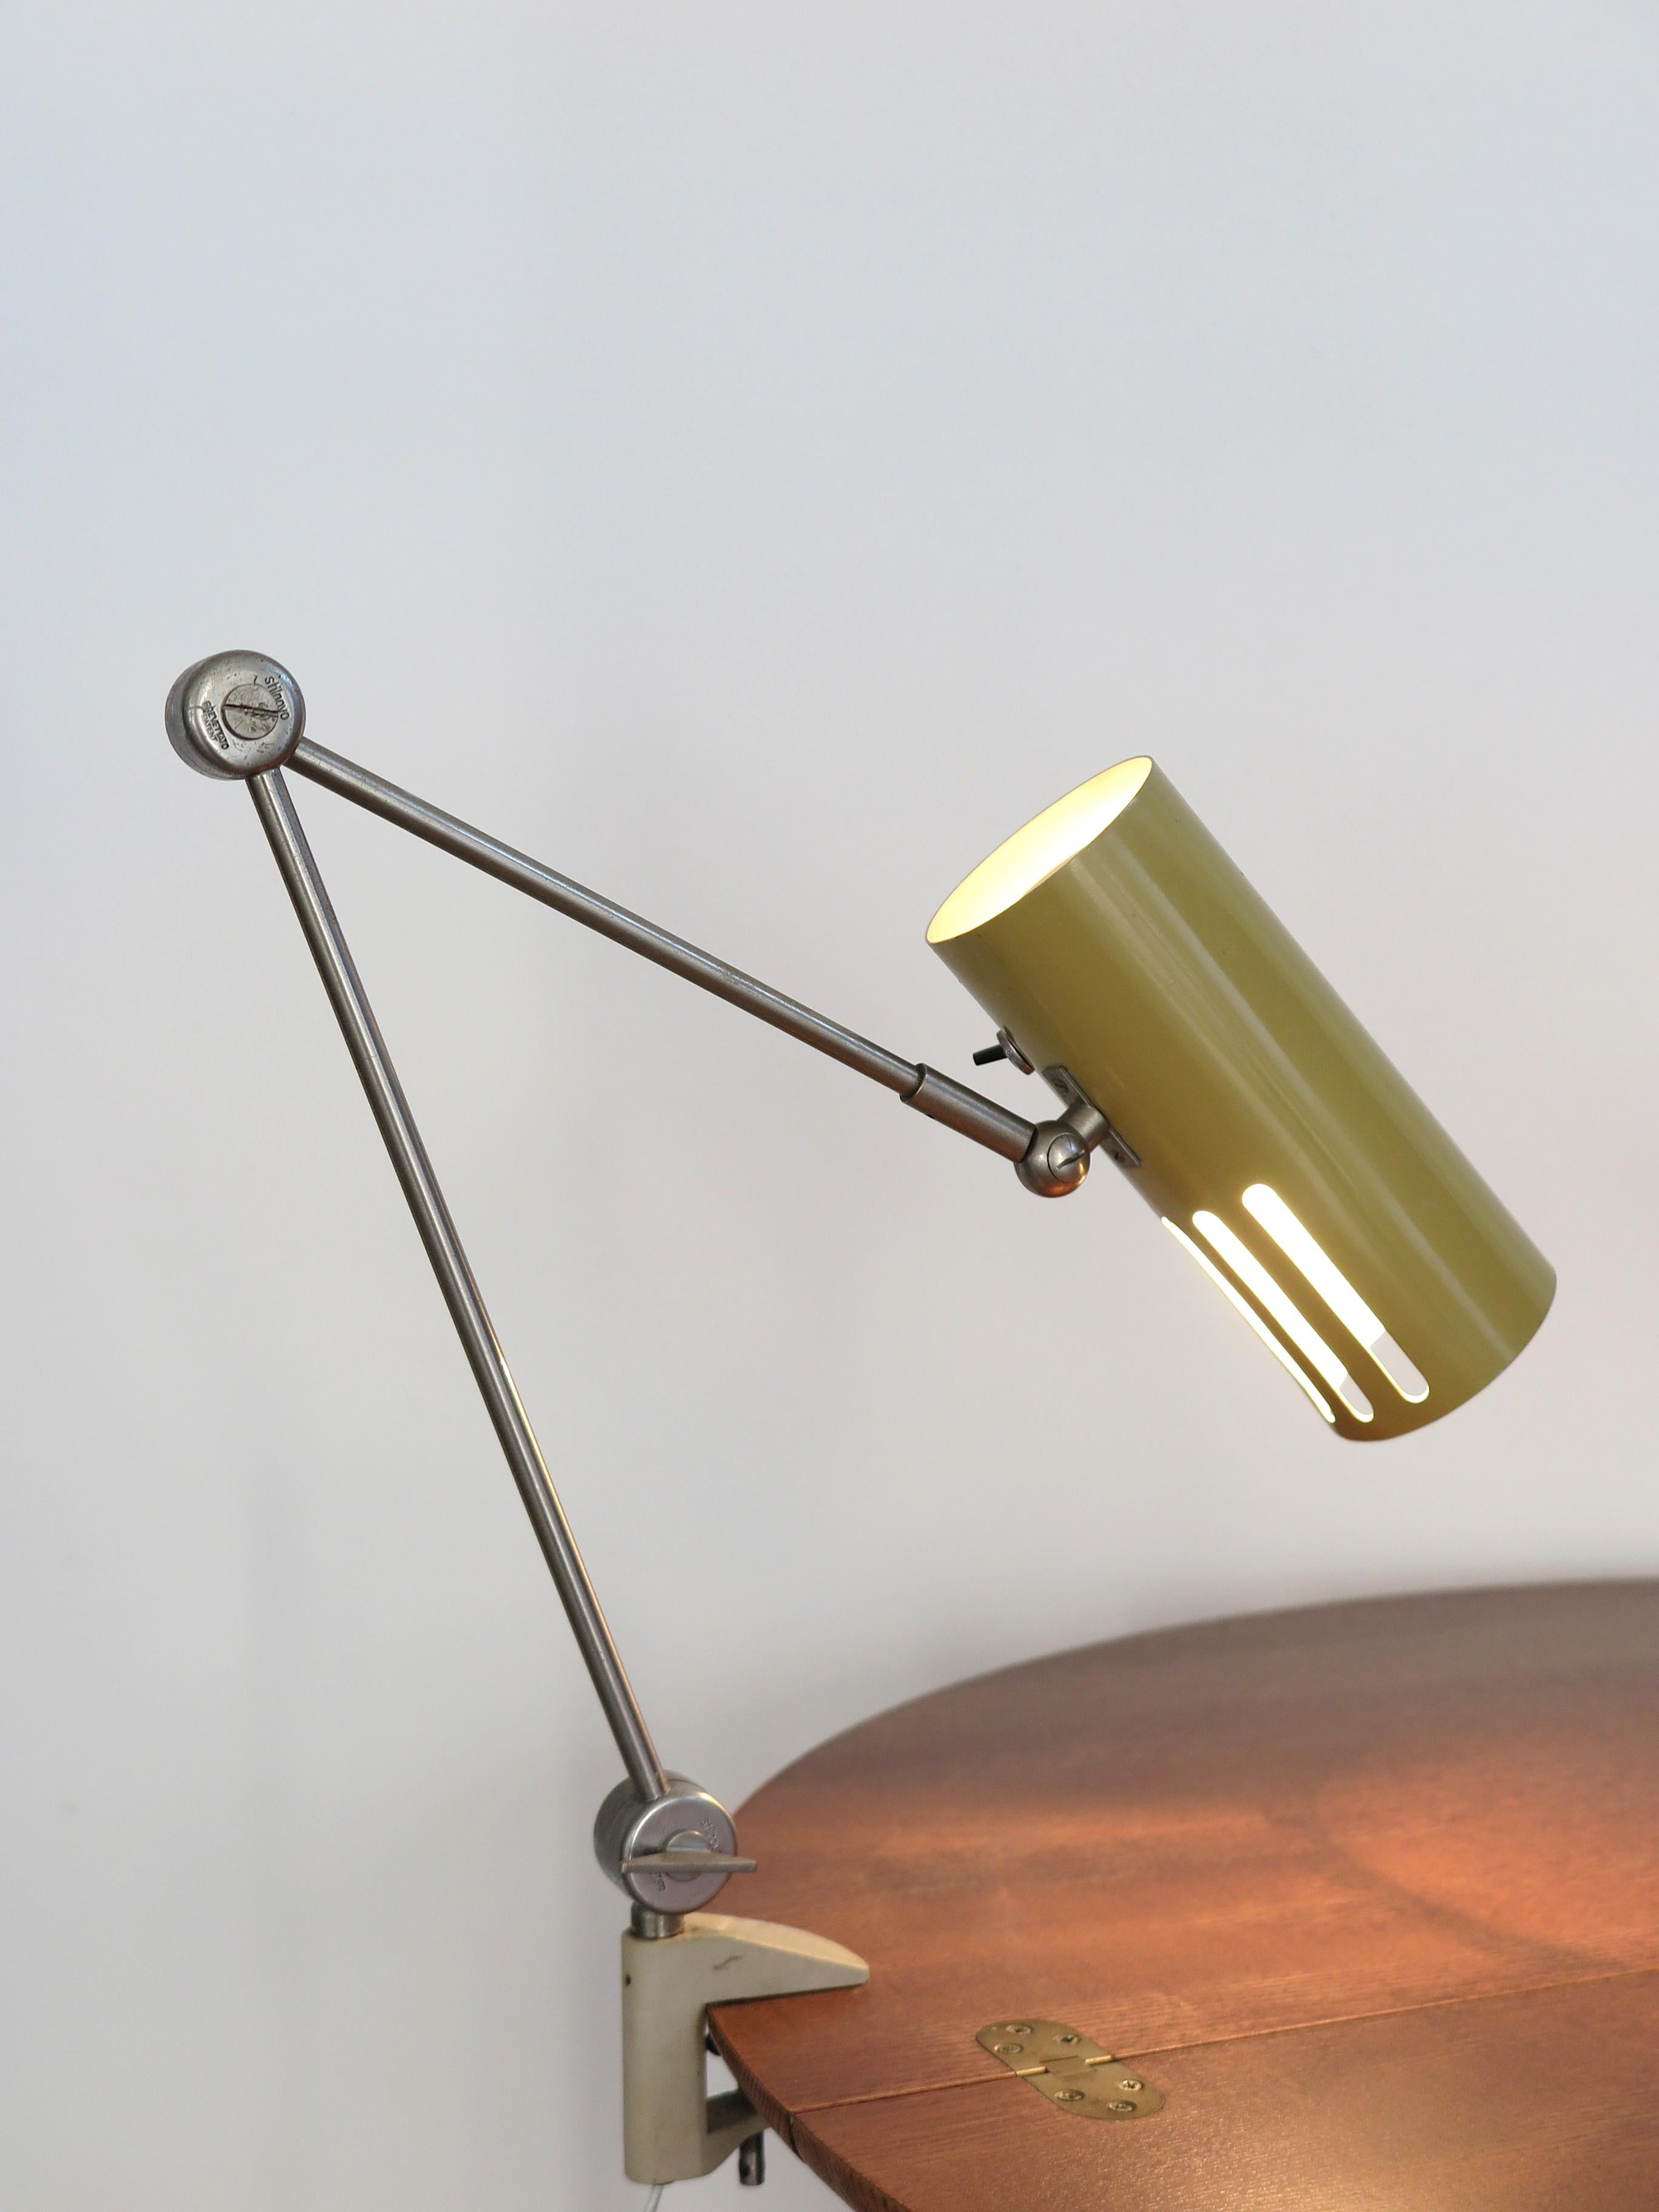 Italian Stilnovo Midcentury Modern Metal Clamp Table Lamp 1950s In Fair Condition For Sale In Reggio Emilia, IT